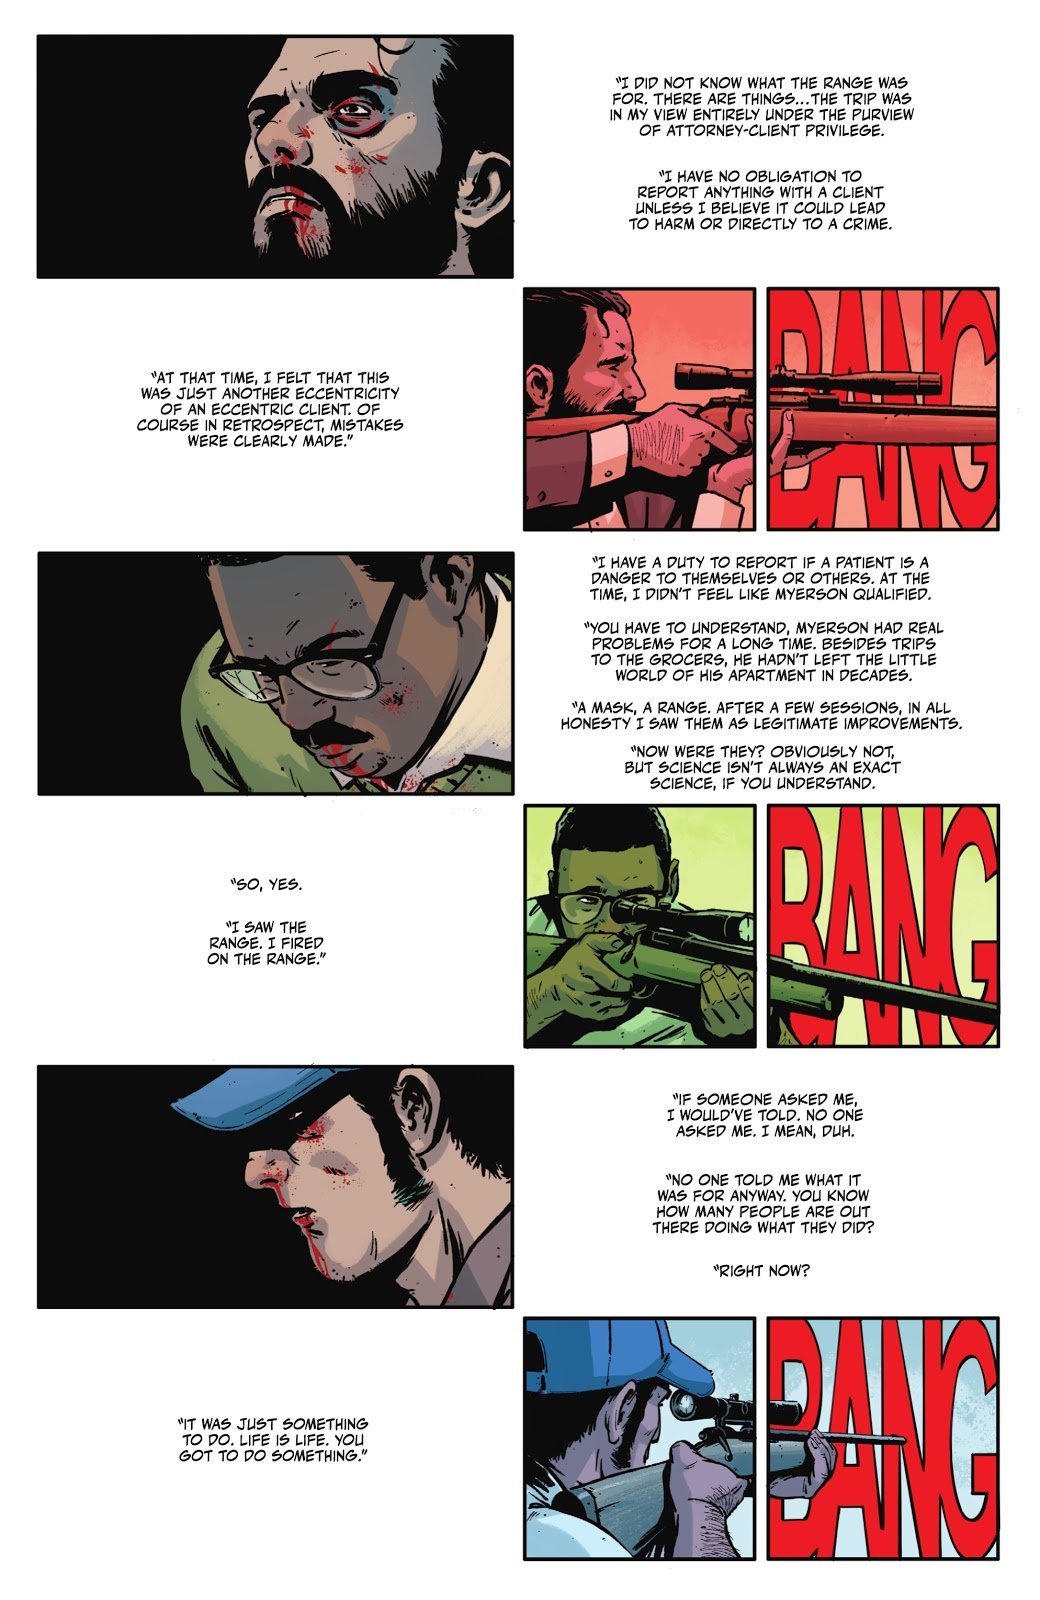 Rorschach #11 Preview - The Comic Book Dispatch